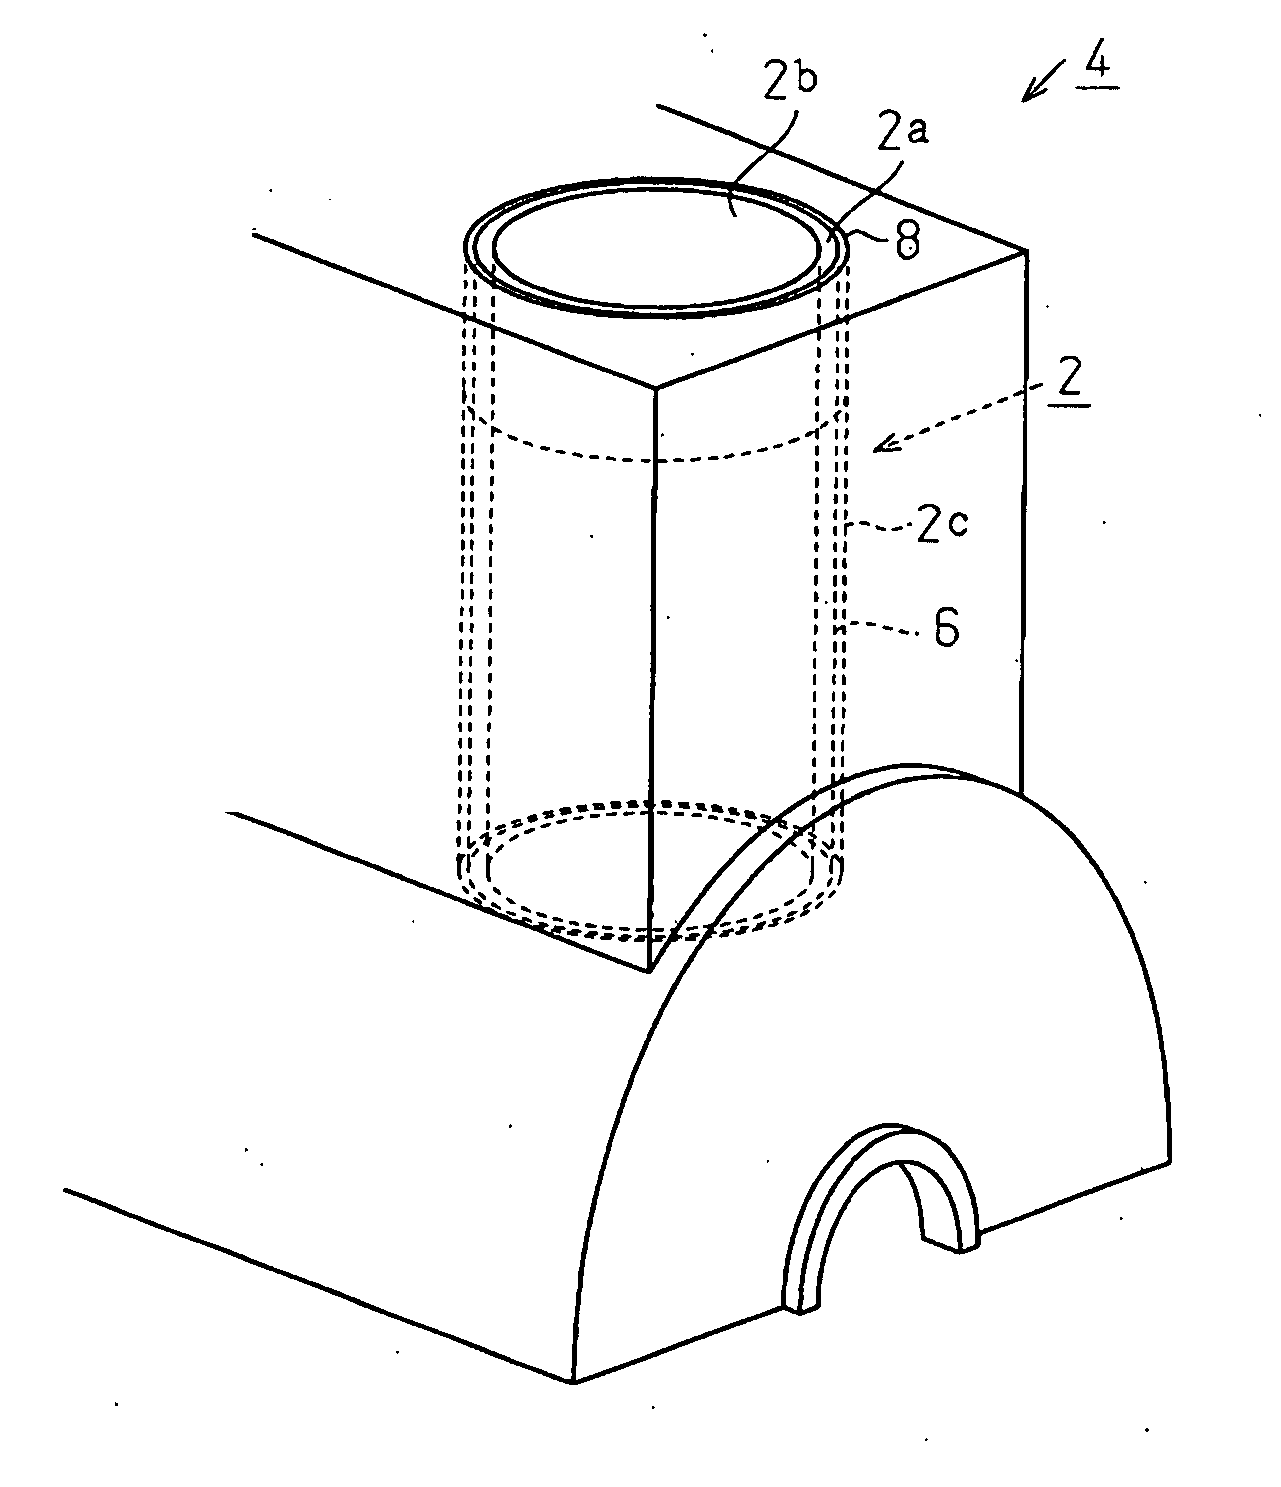 Component for insert casting, cylinder block, and method for manufacturing cylinder liner